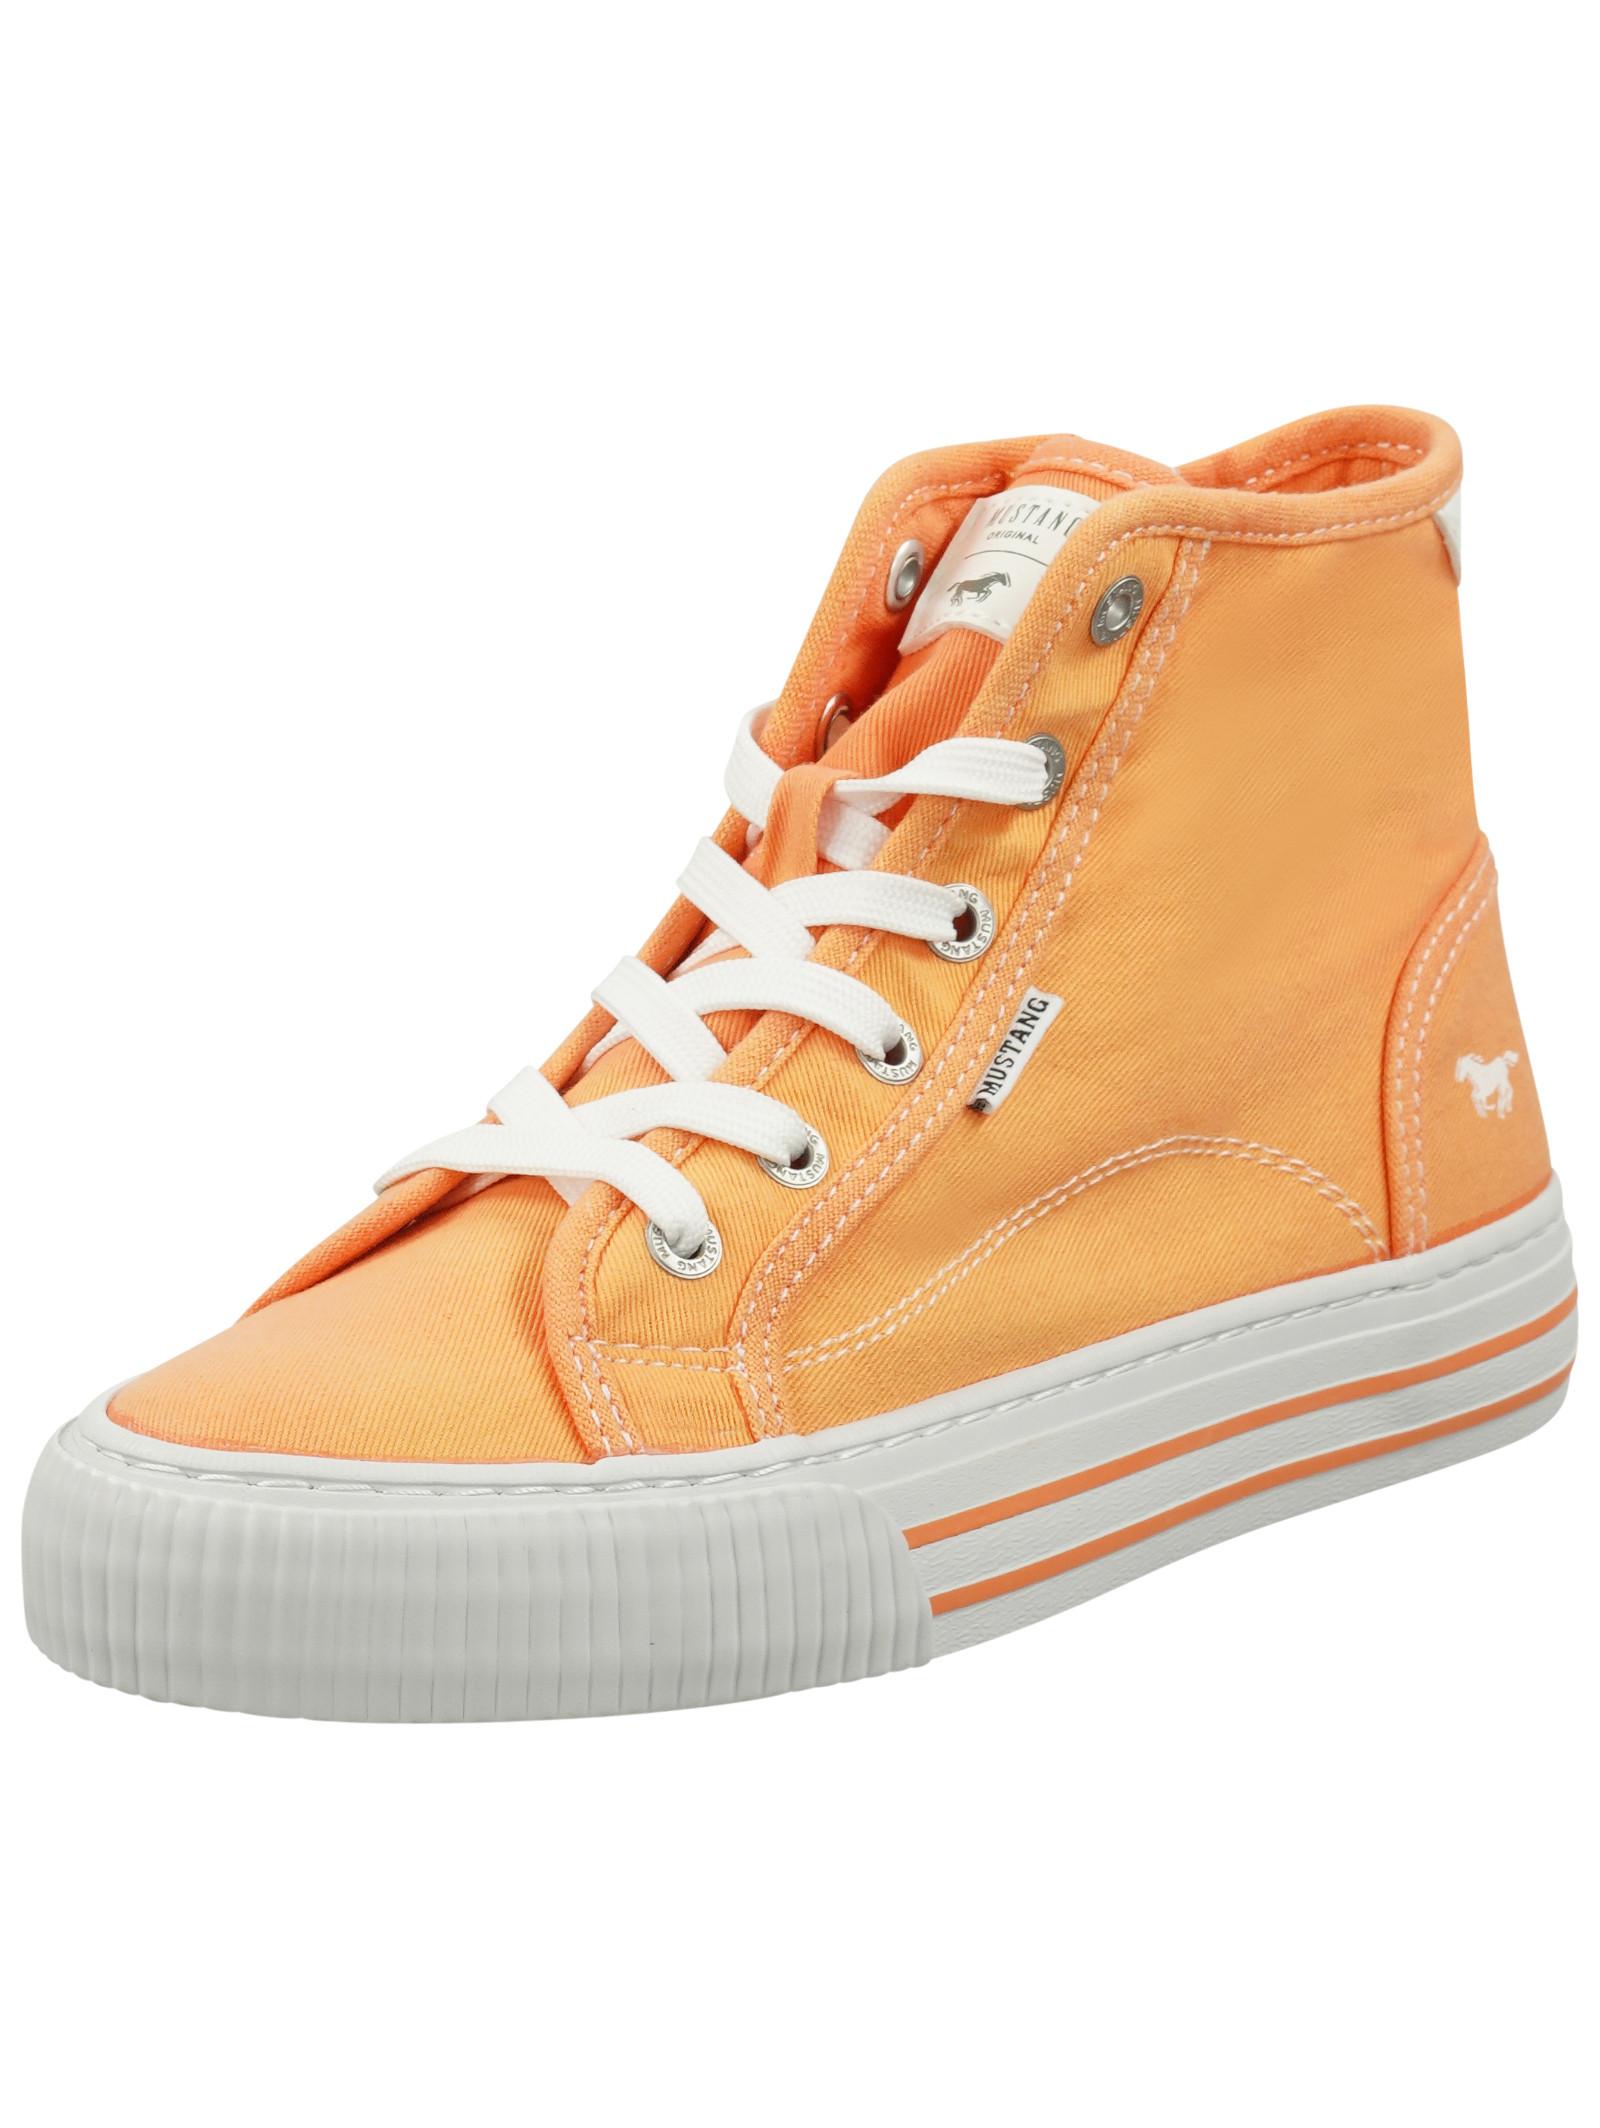 Sneaker 1420-506 Unisex Orange 36